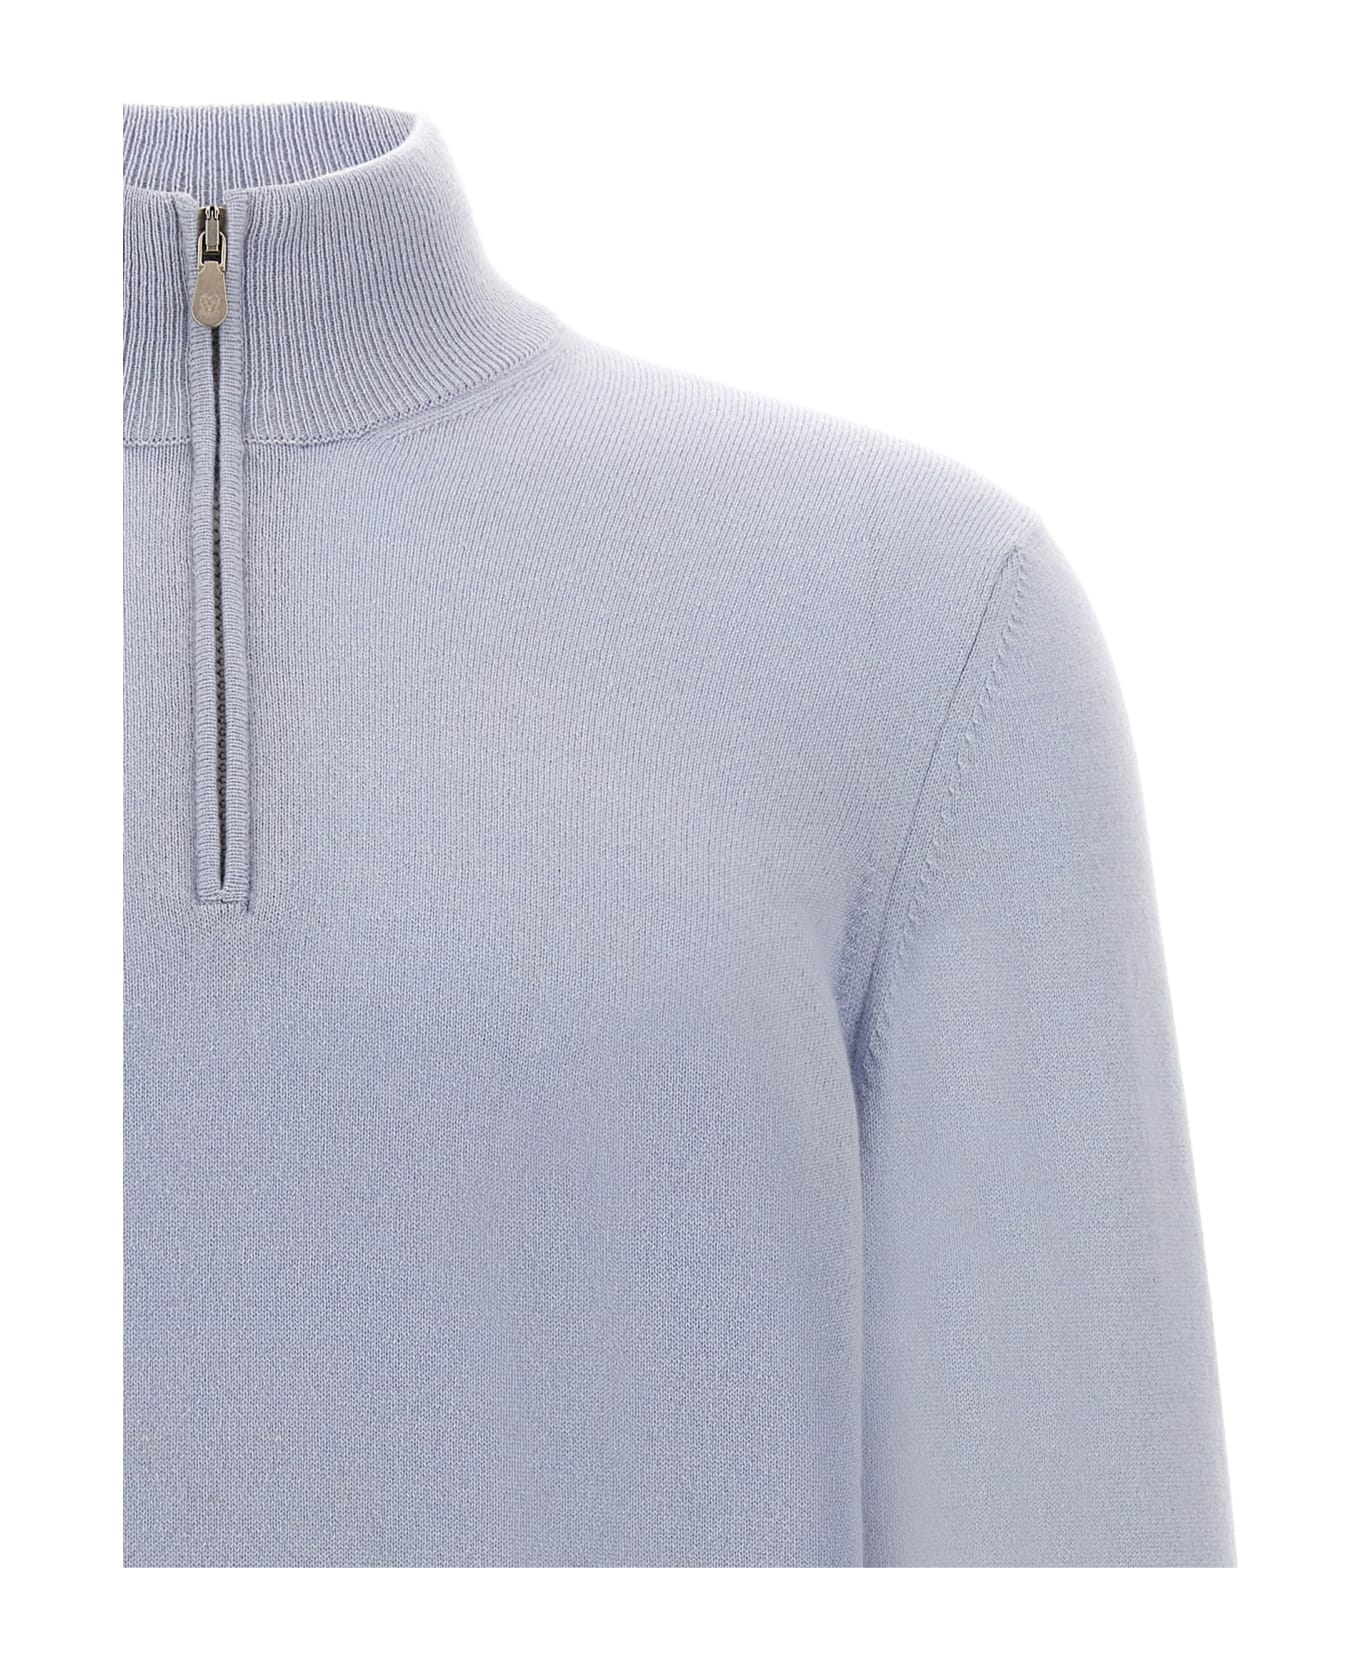 Brunello Cucinelli Cashmere Sweater - Light Blue ニットウェア